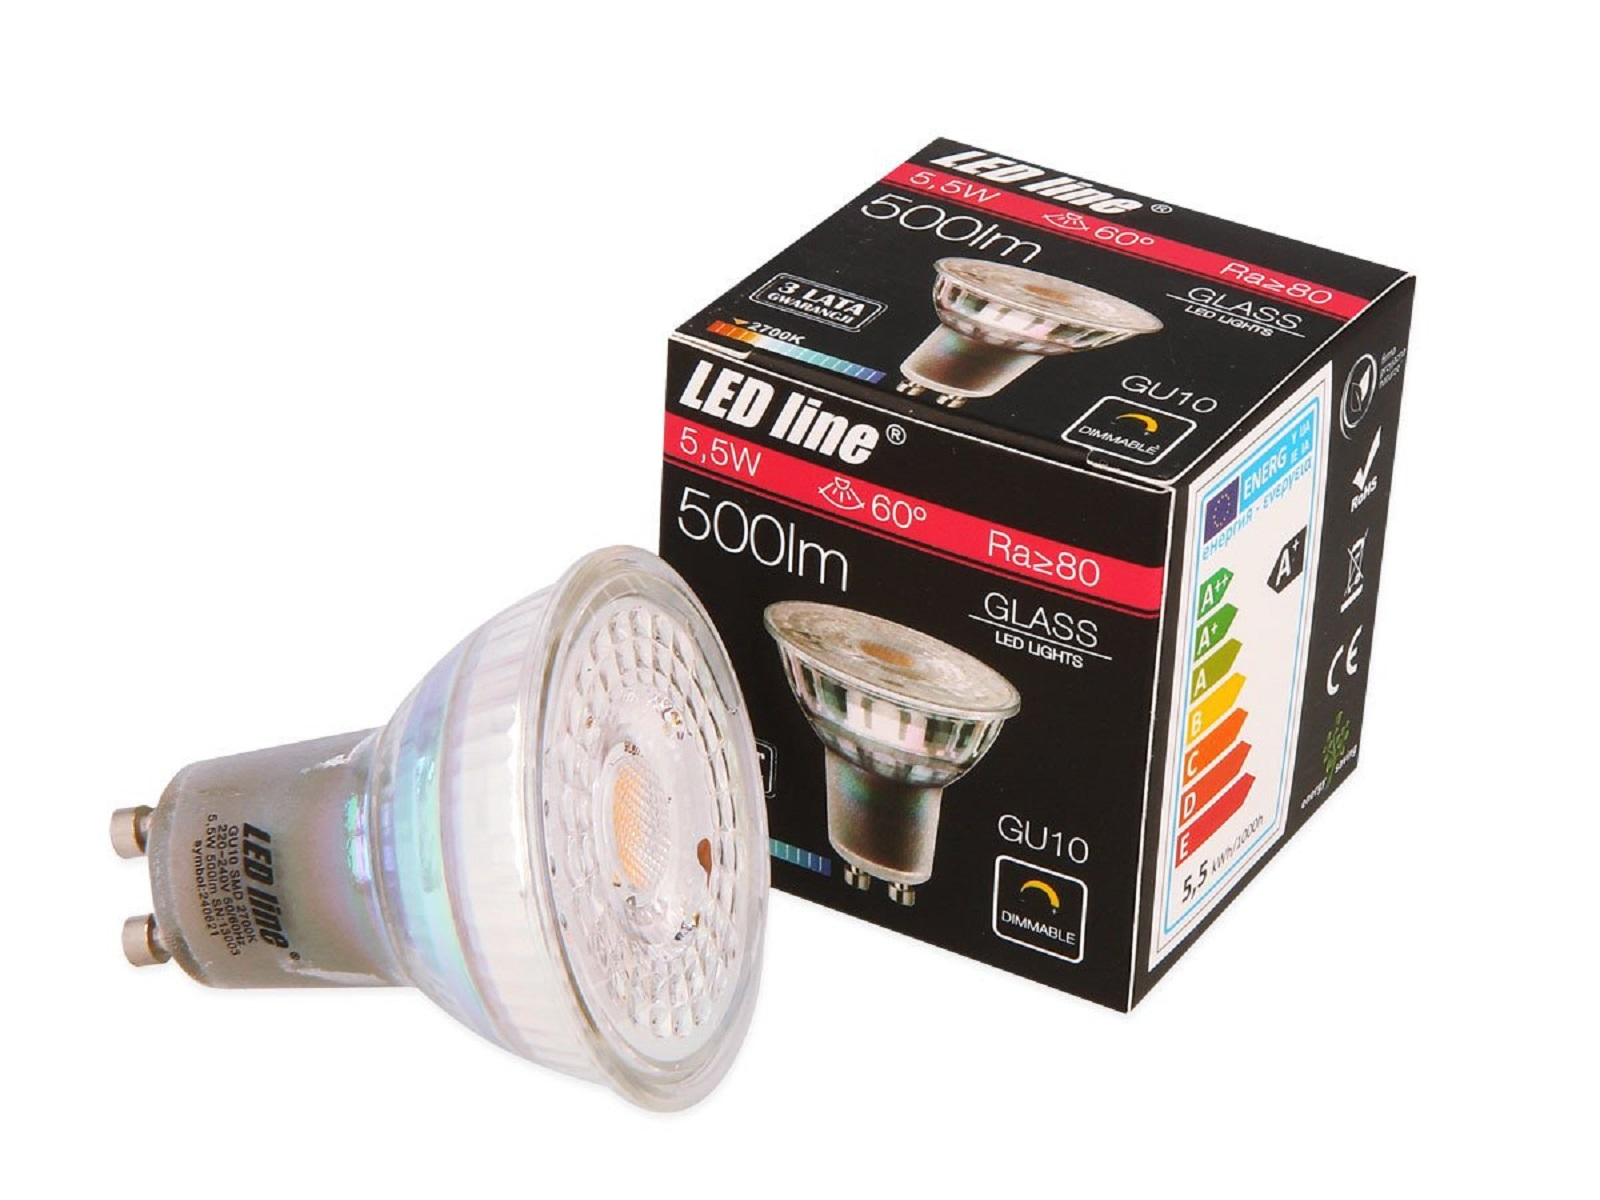 LED LINE 500 Warmweiß Strahler 3x LED Leuchtmittel GU10 GU10 5,5W Spot Lumen